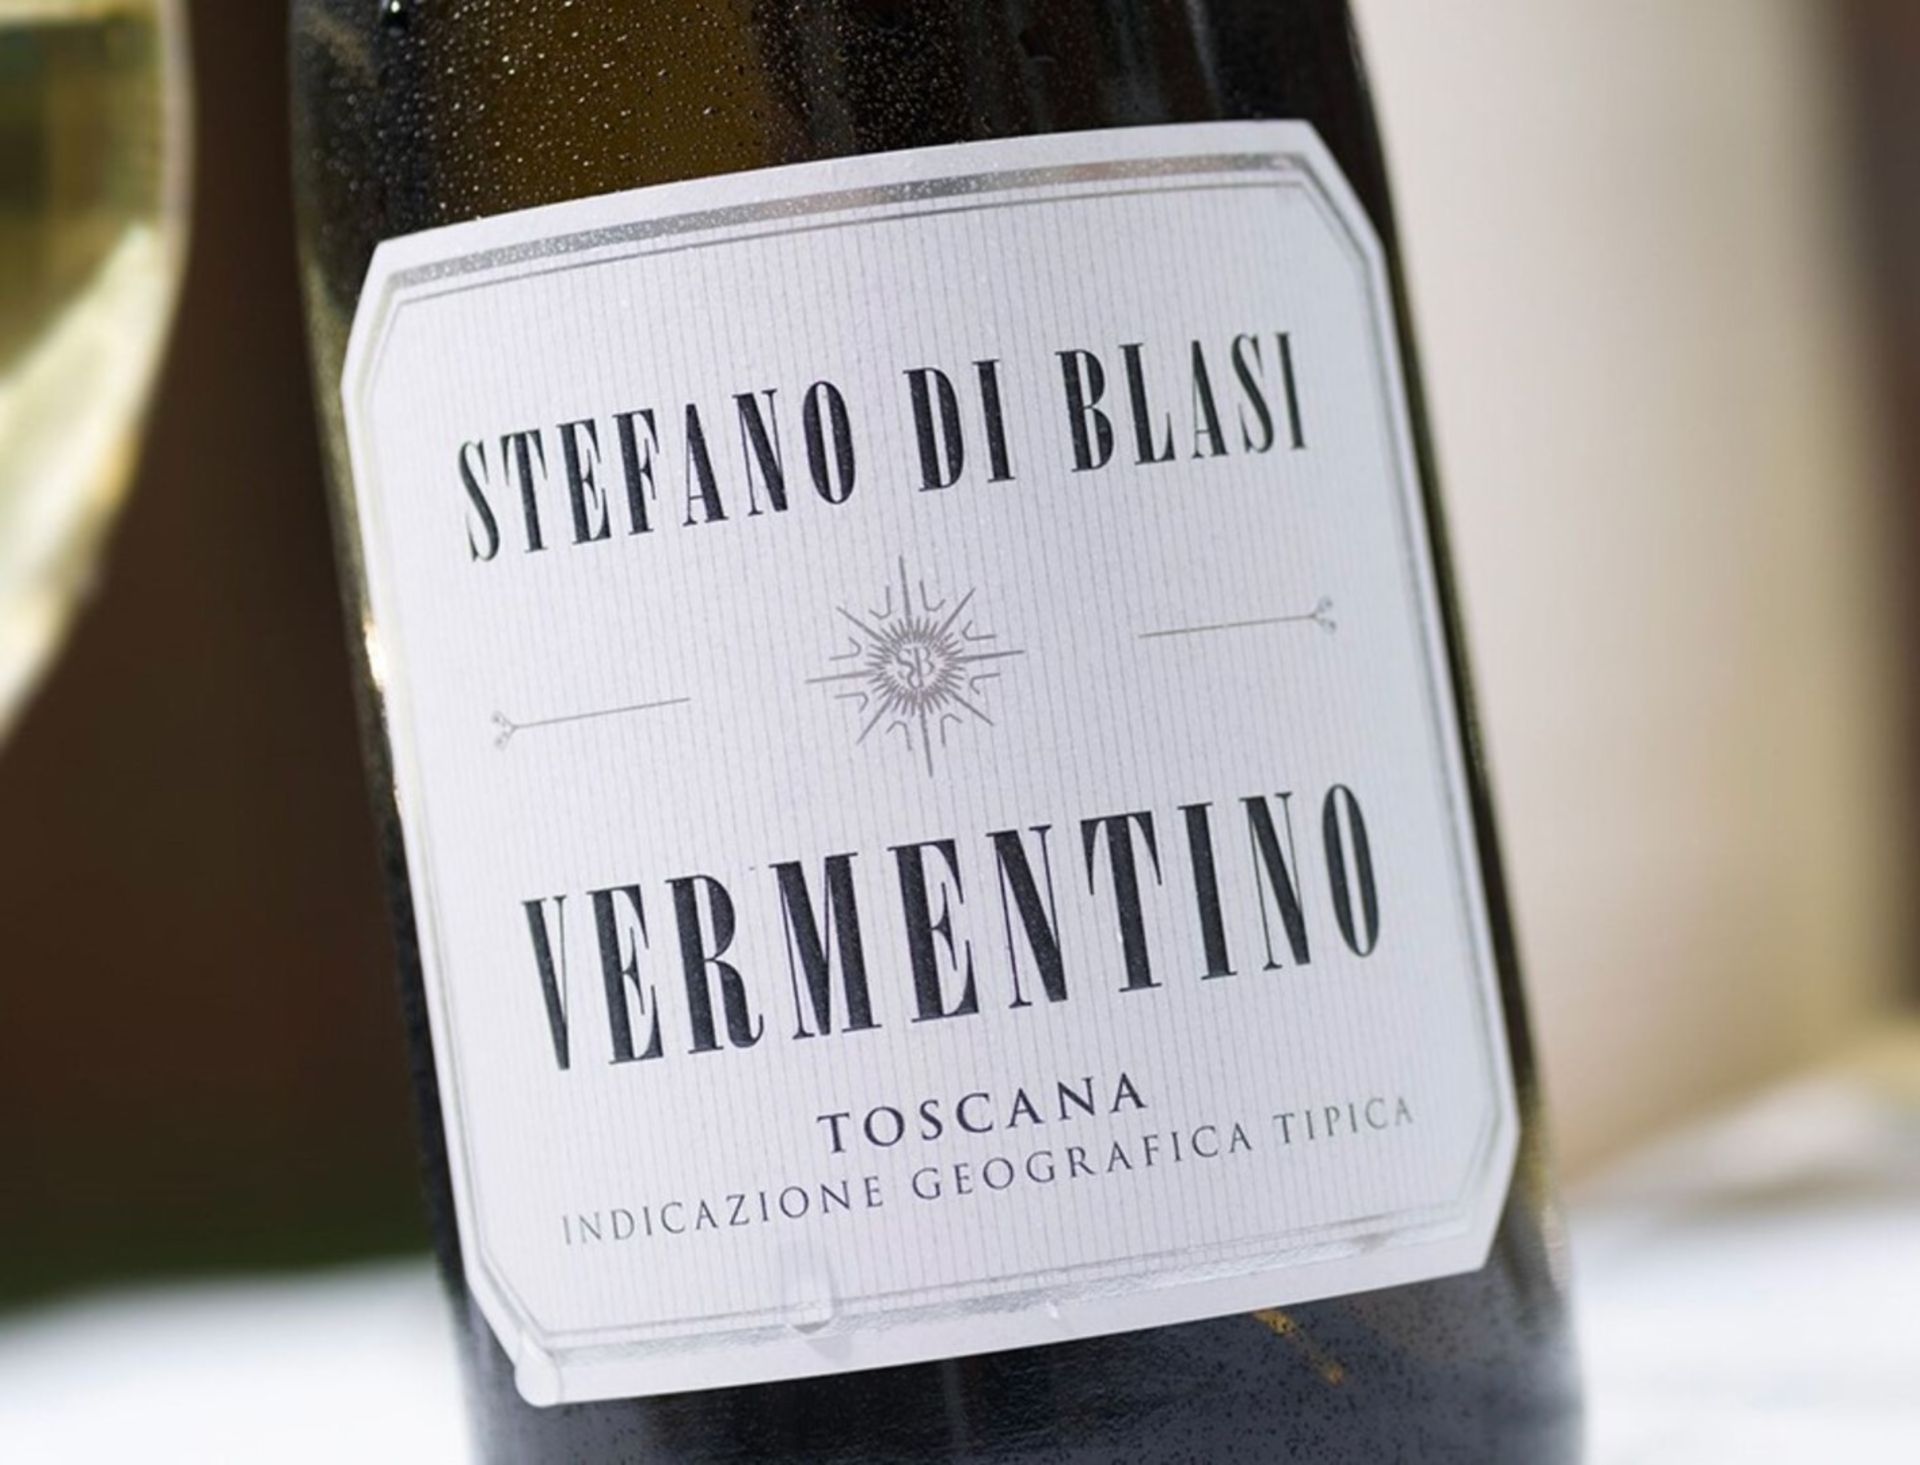 12 x Bottles of Stefano Di Blasi 2019 Vermentino Toscana 13.5% Wine - 750ml Bottles - Drink Until - Image 8 of 8